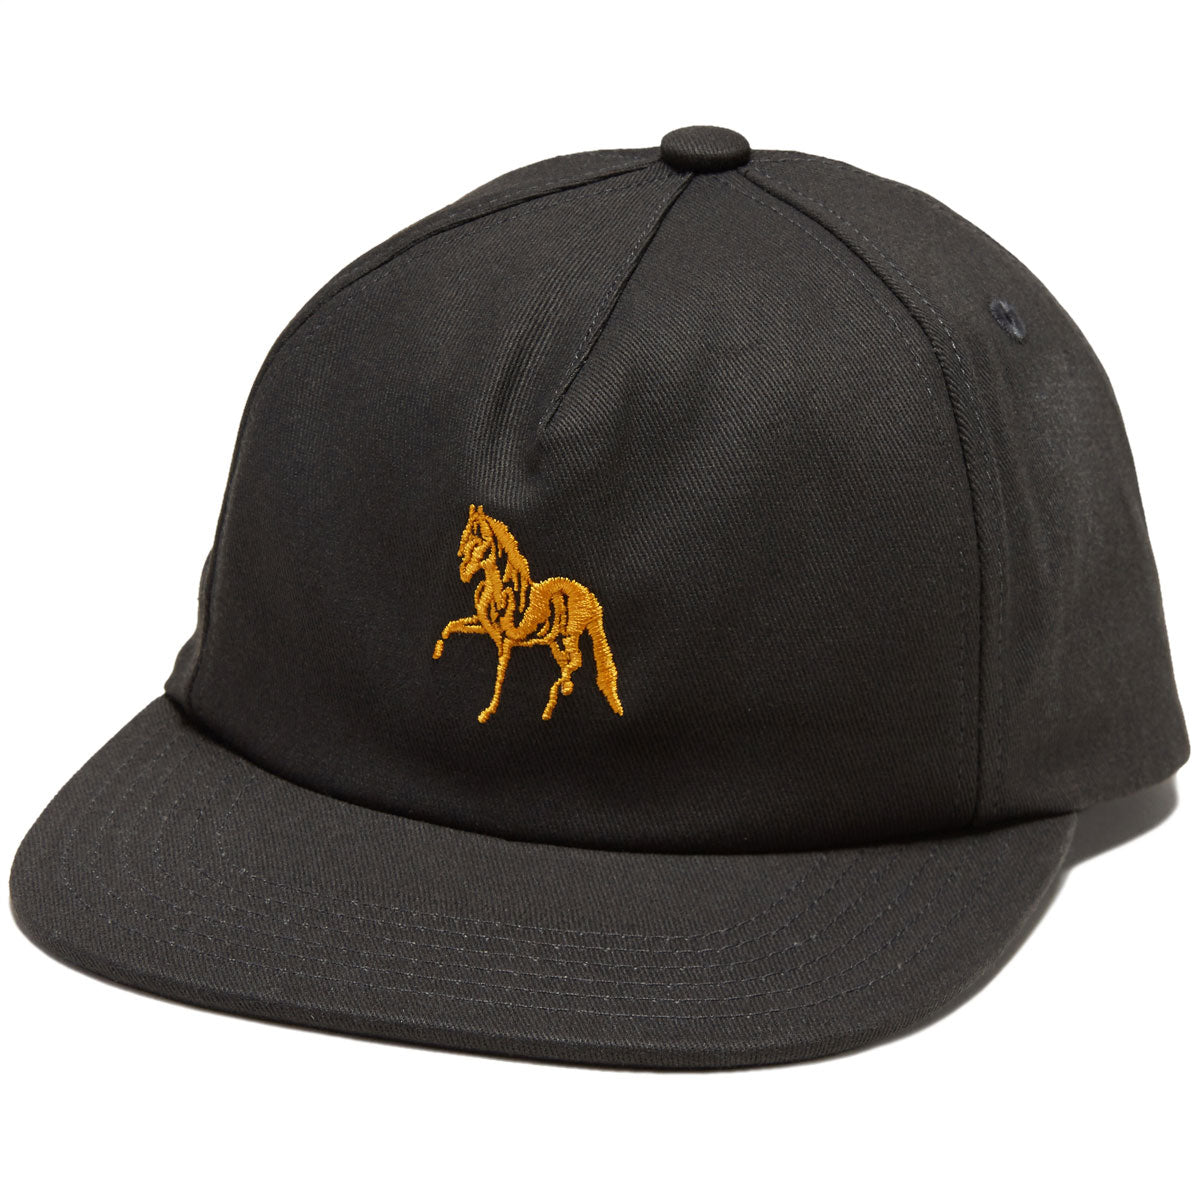 HUF Small Horse Snapback Hat - Black image 1